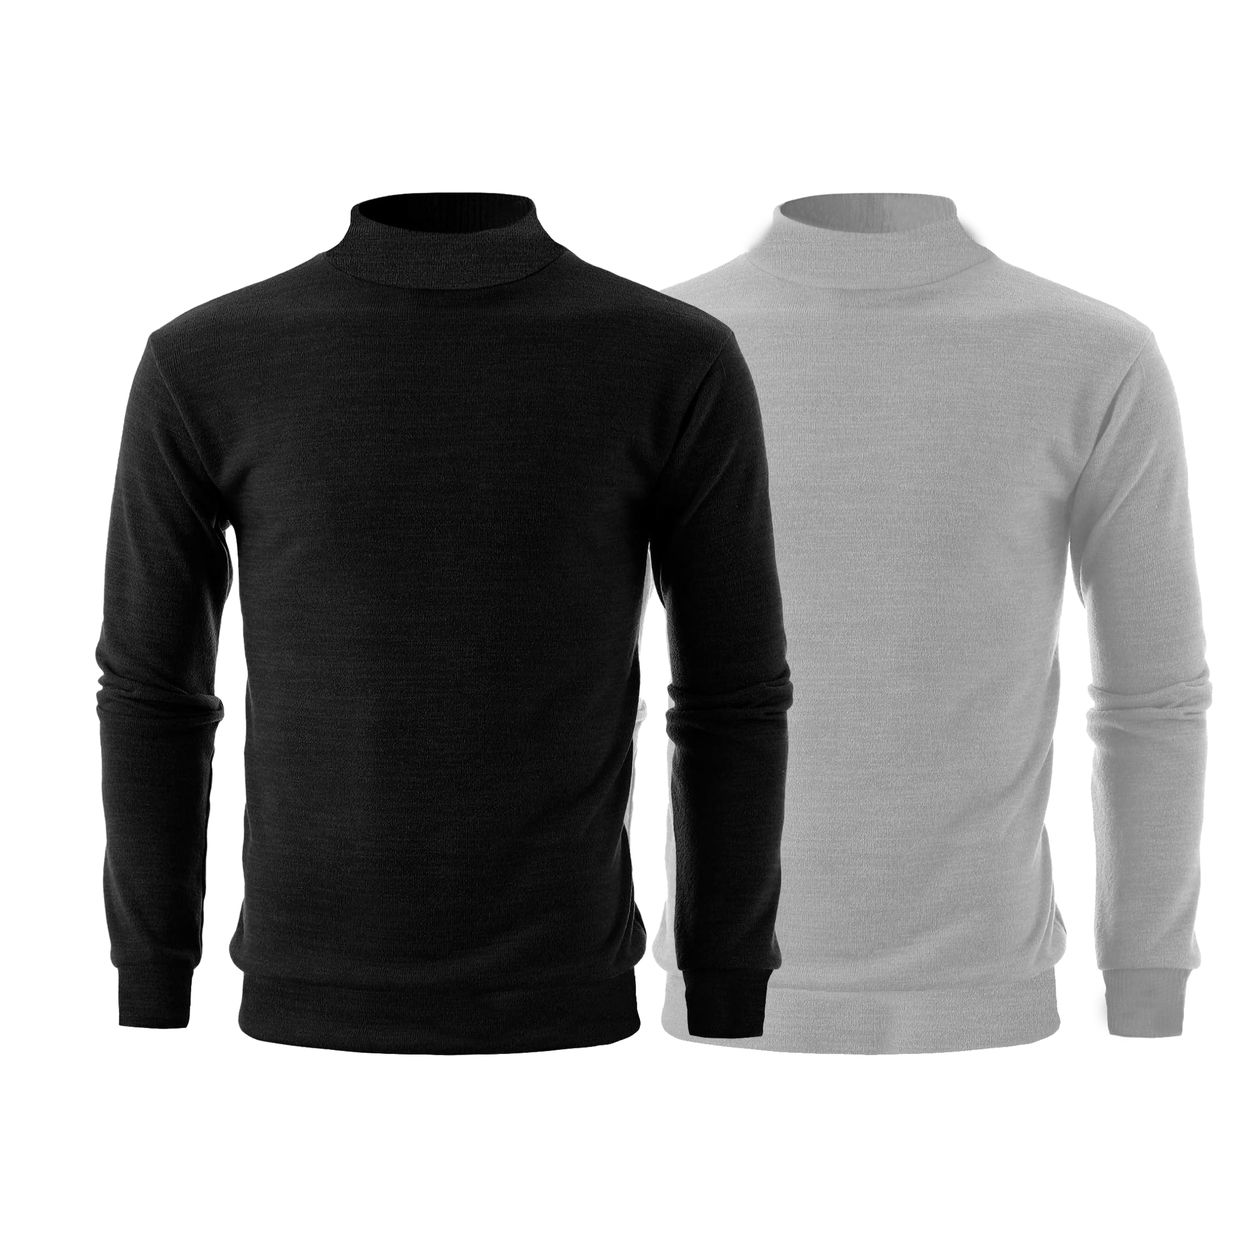 2-Pack: Men's Winter Warm Cozy Knit Slim Fit Mock Neck Sweater - Black& Burgundy, Xx-large